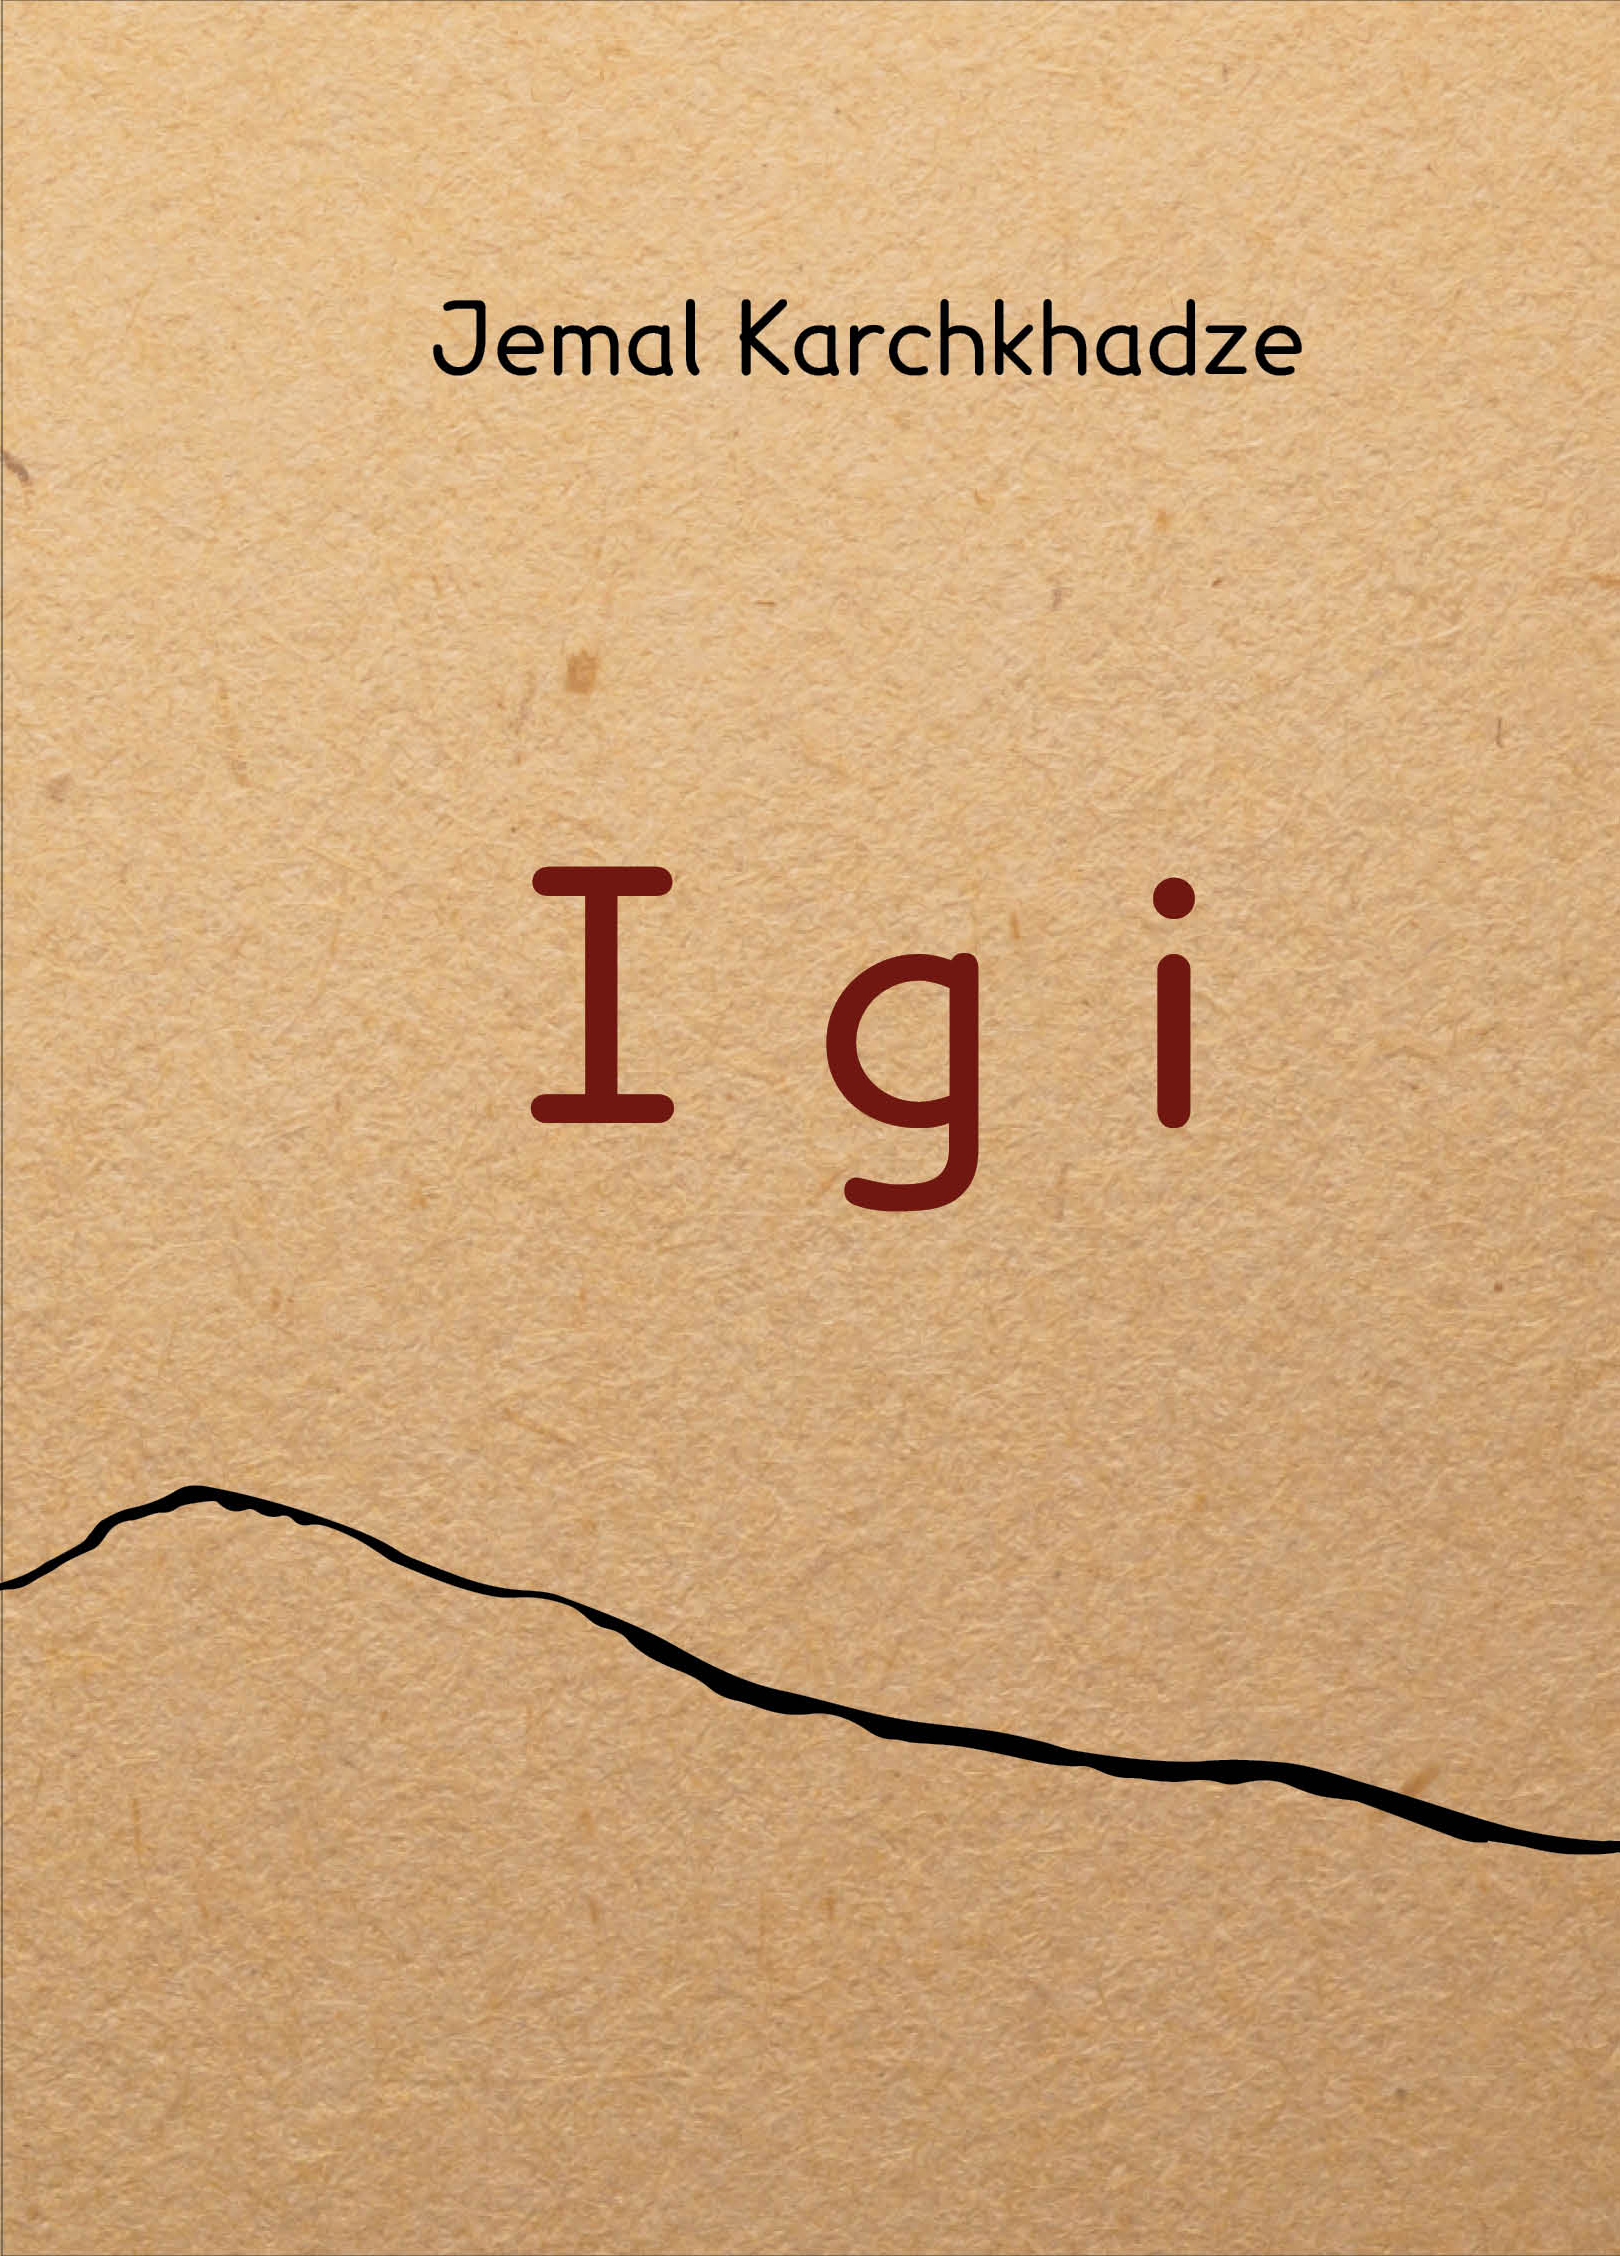 English Books / ლიტერატურა ინგლისურ ენაზე - Karchkhadze Jemal; ქარჩხაძე ჯემალ - Igi (A prehistorical short story)